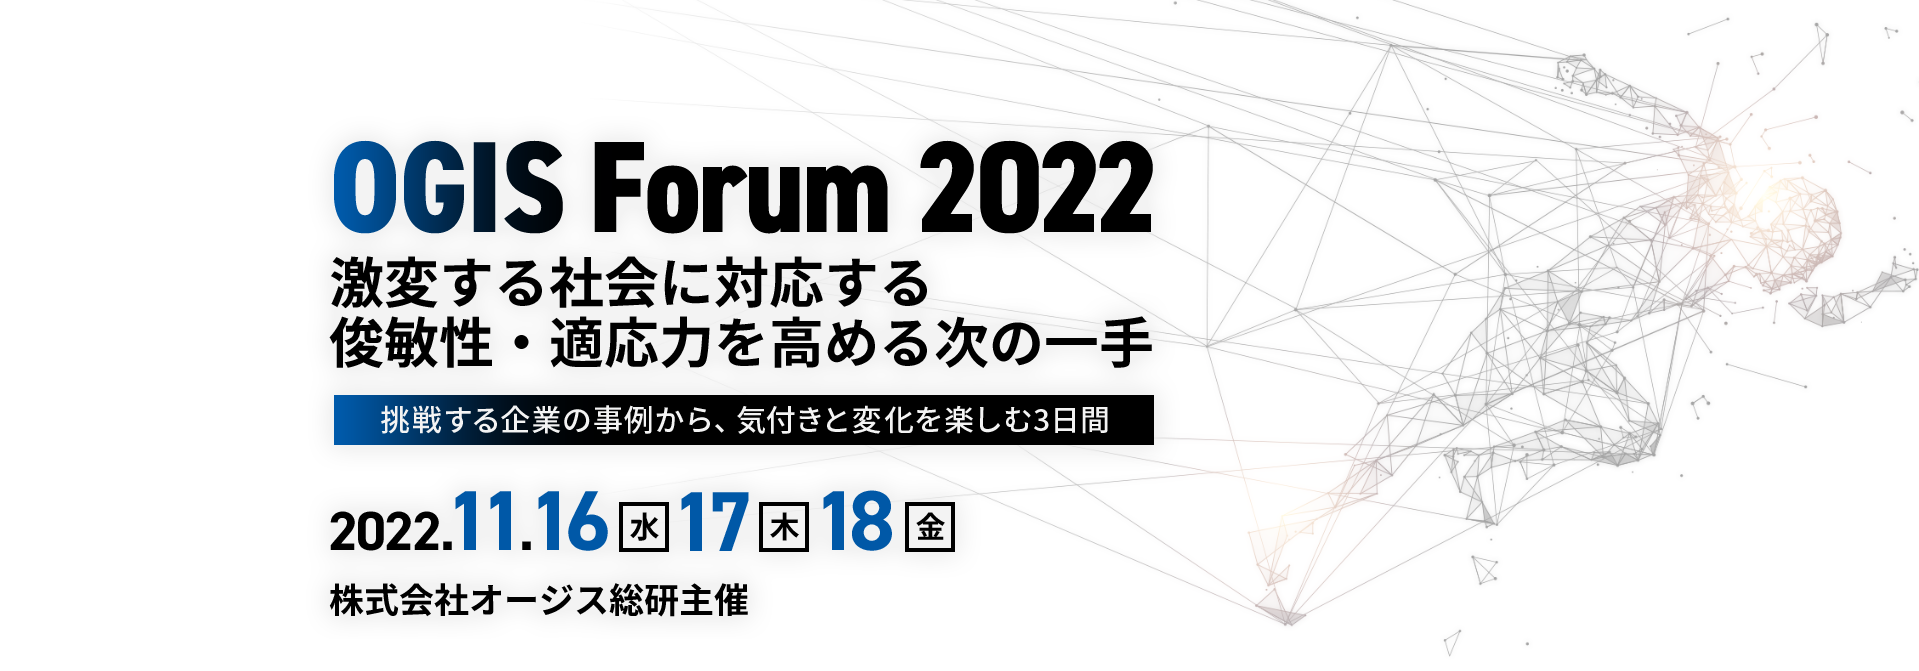  OGIS Forum 2022 激変する社会に対応する俊敏性・適応力を高める次の一手 ～挑戦する企業の事例から、気付きと変化を楽しむ3日間～